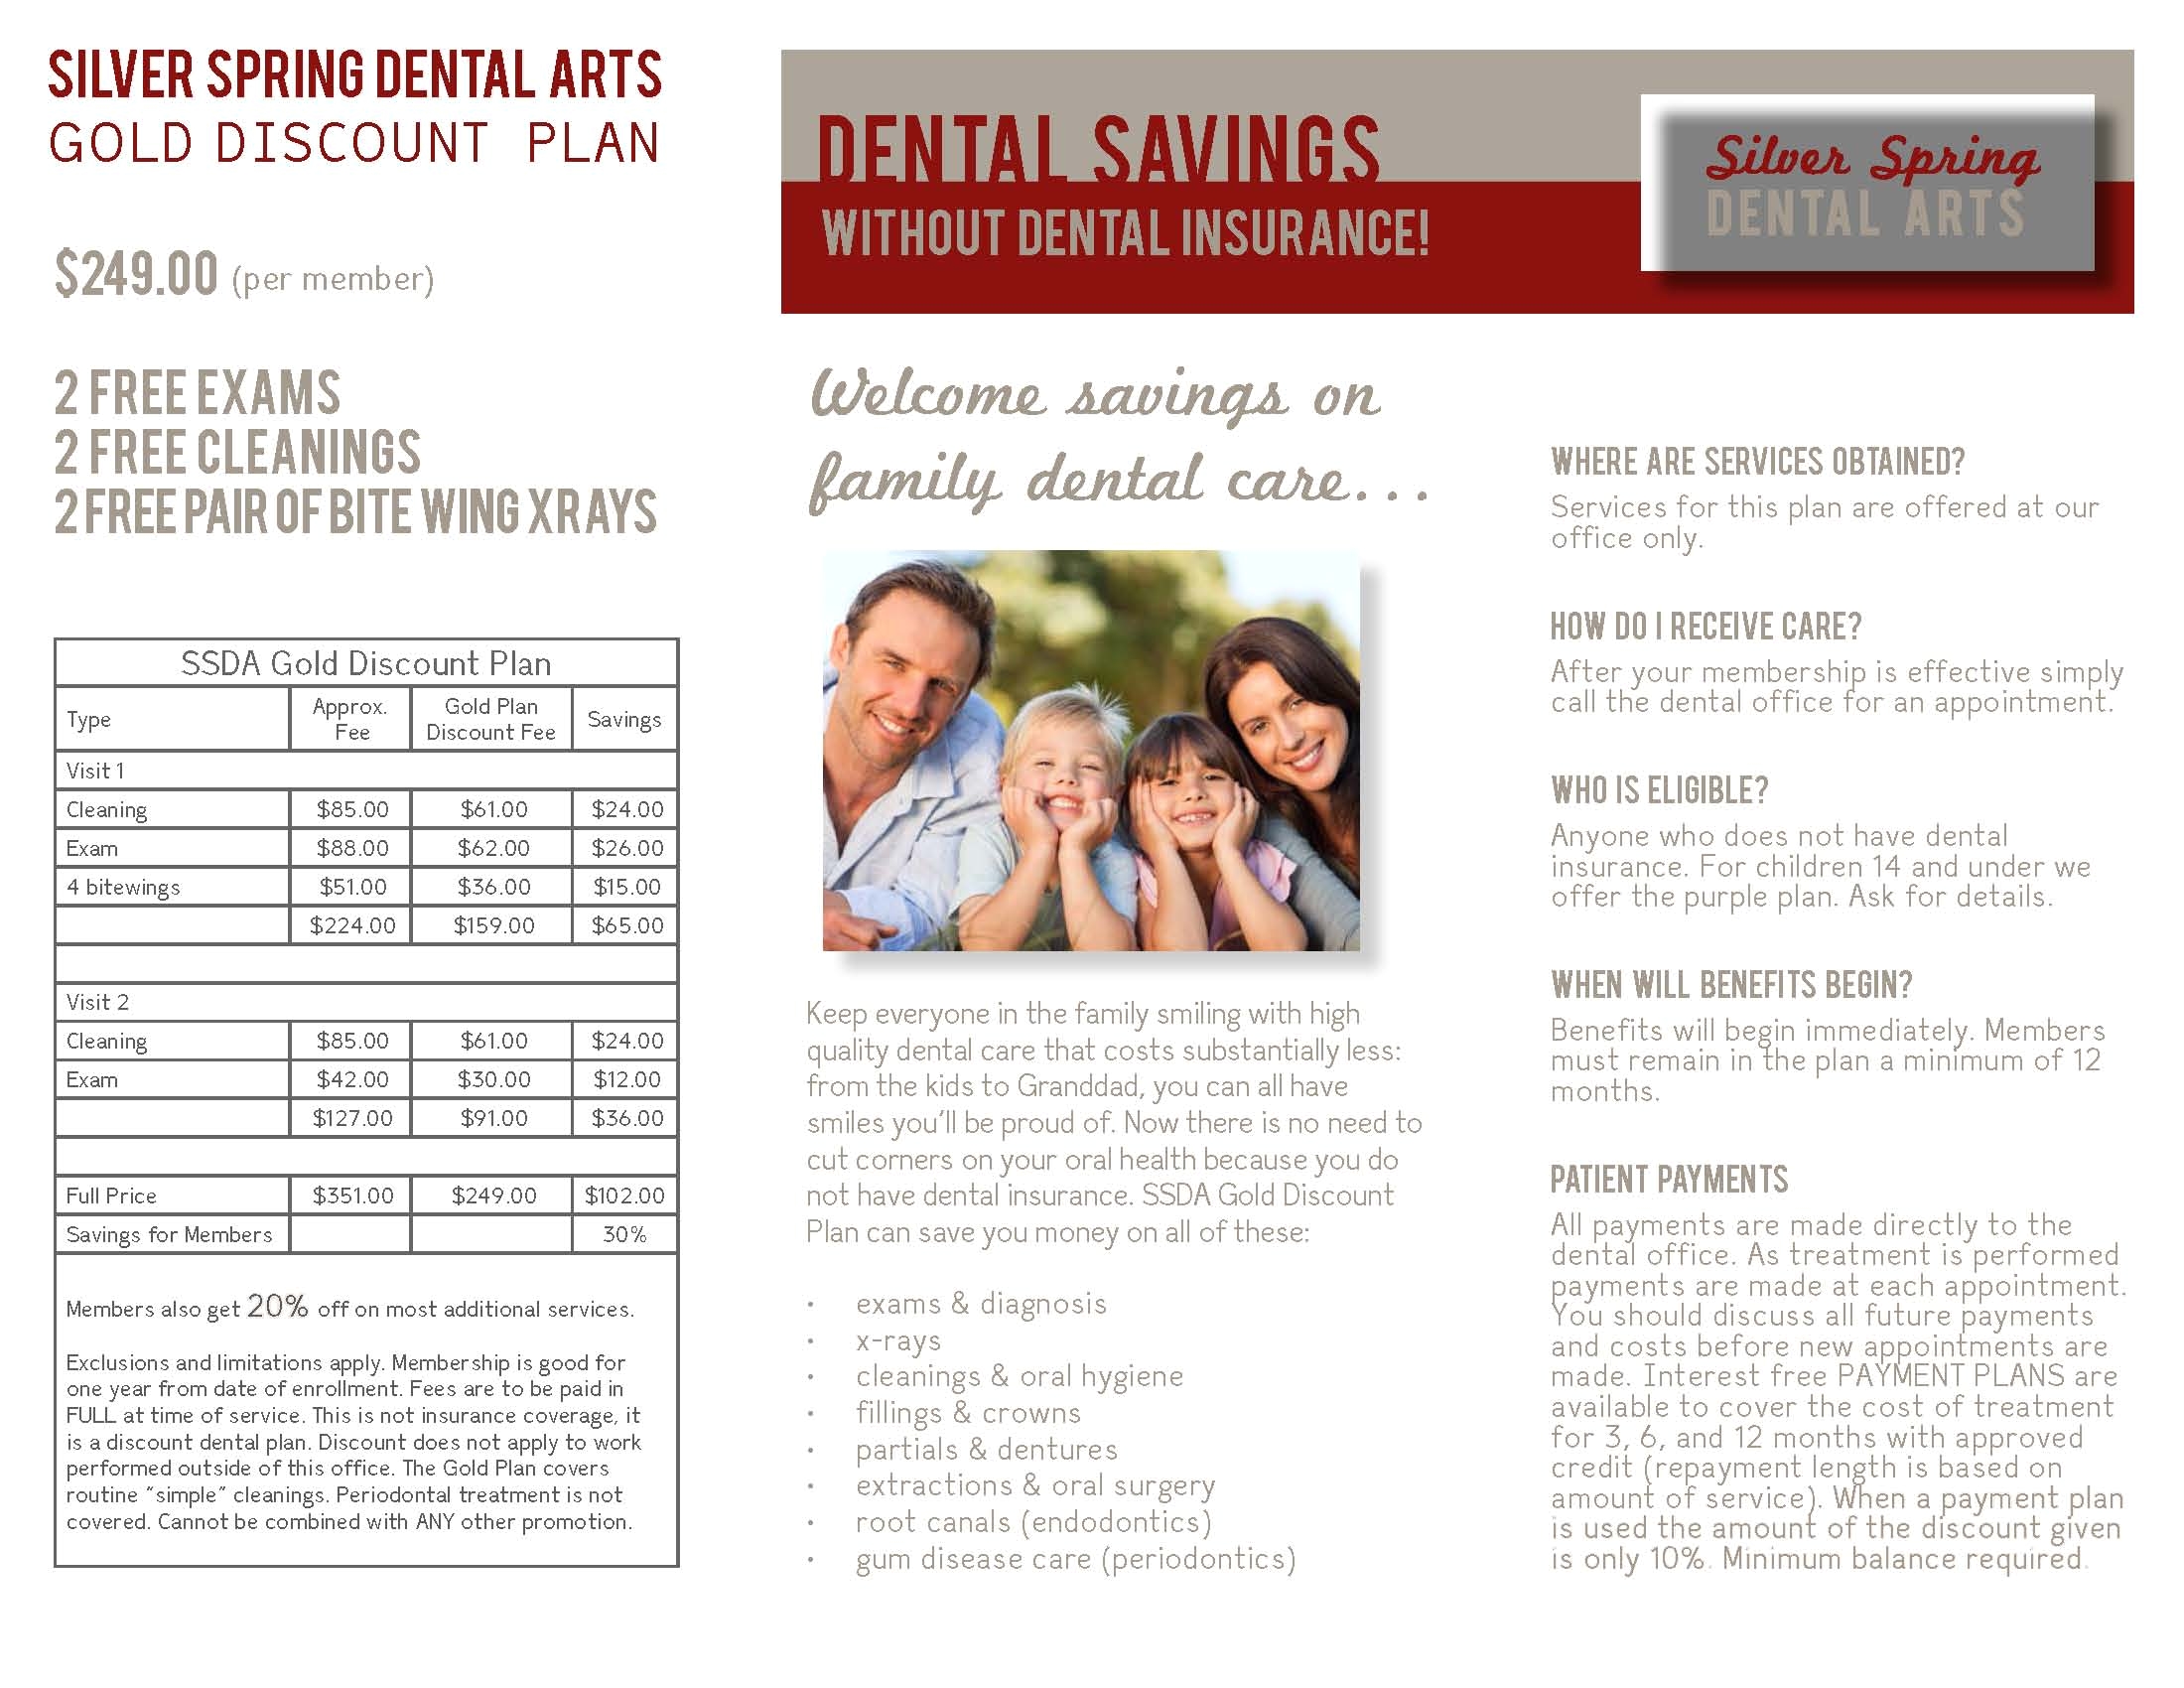 no dental insurance no problem silver spring dental artssilver in house dental membership plans